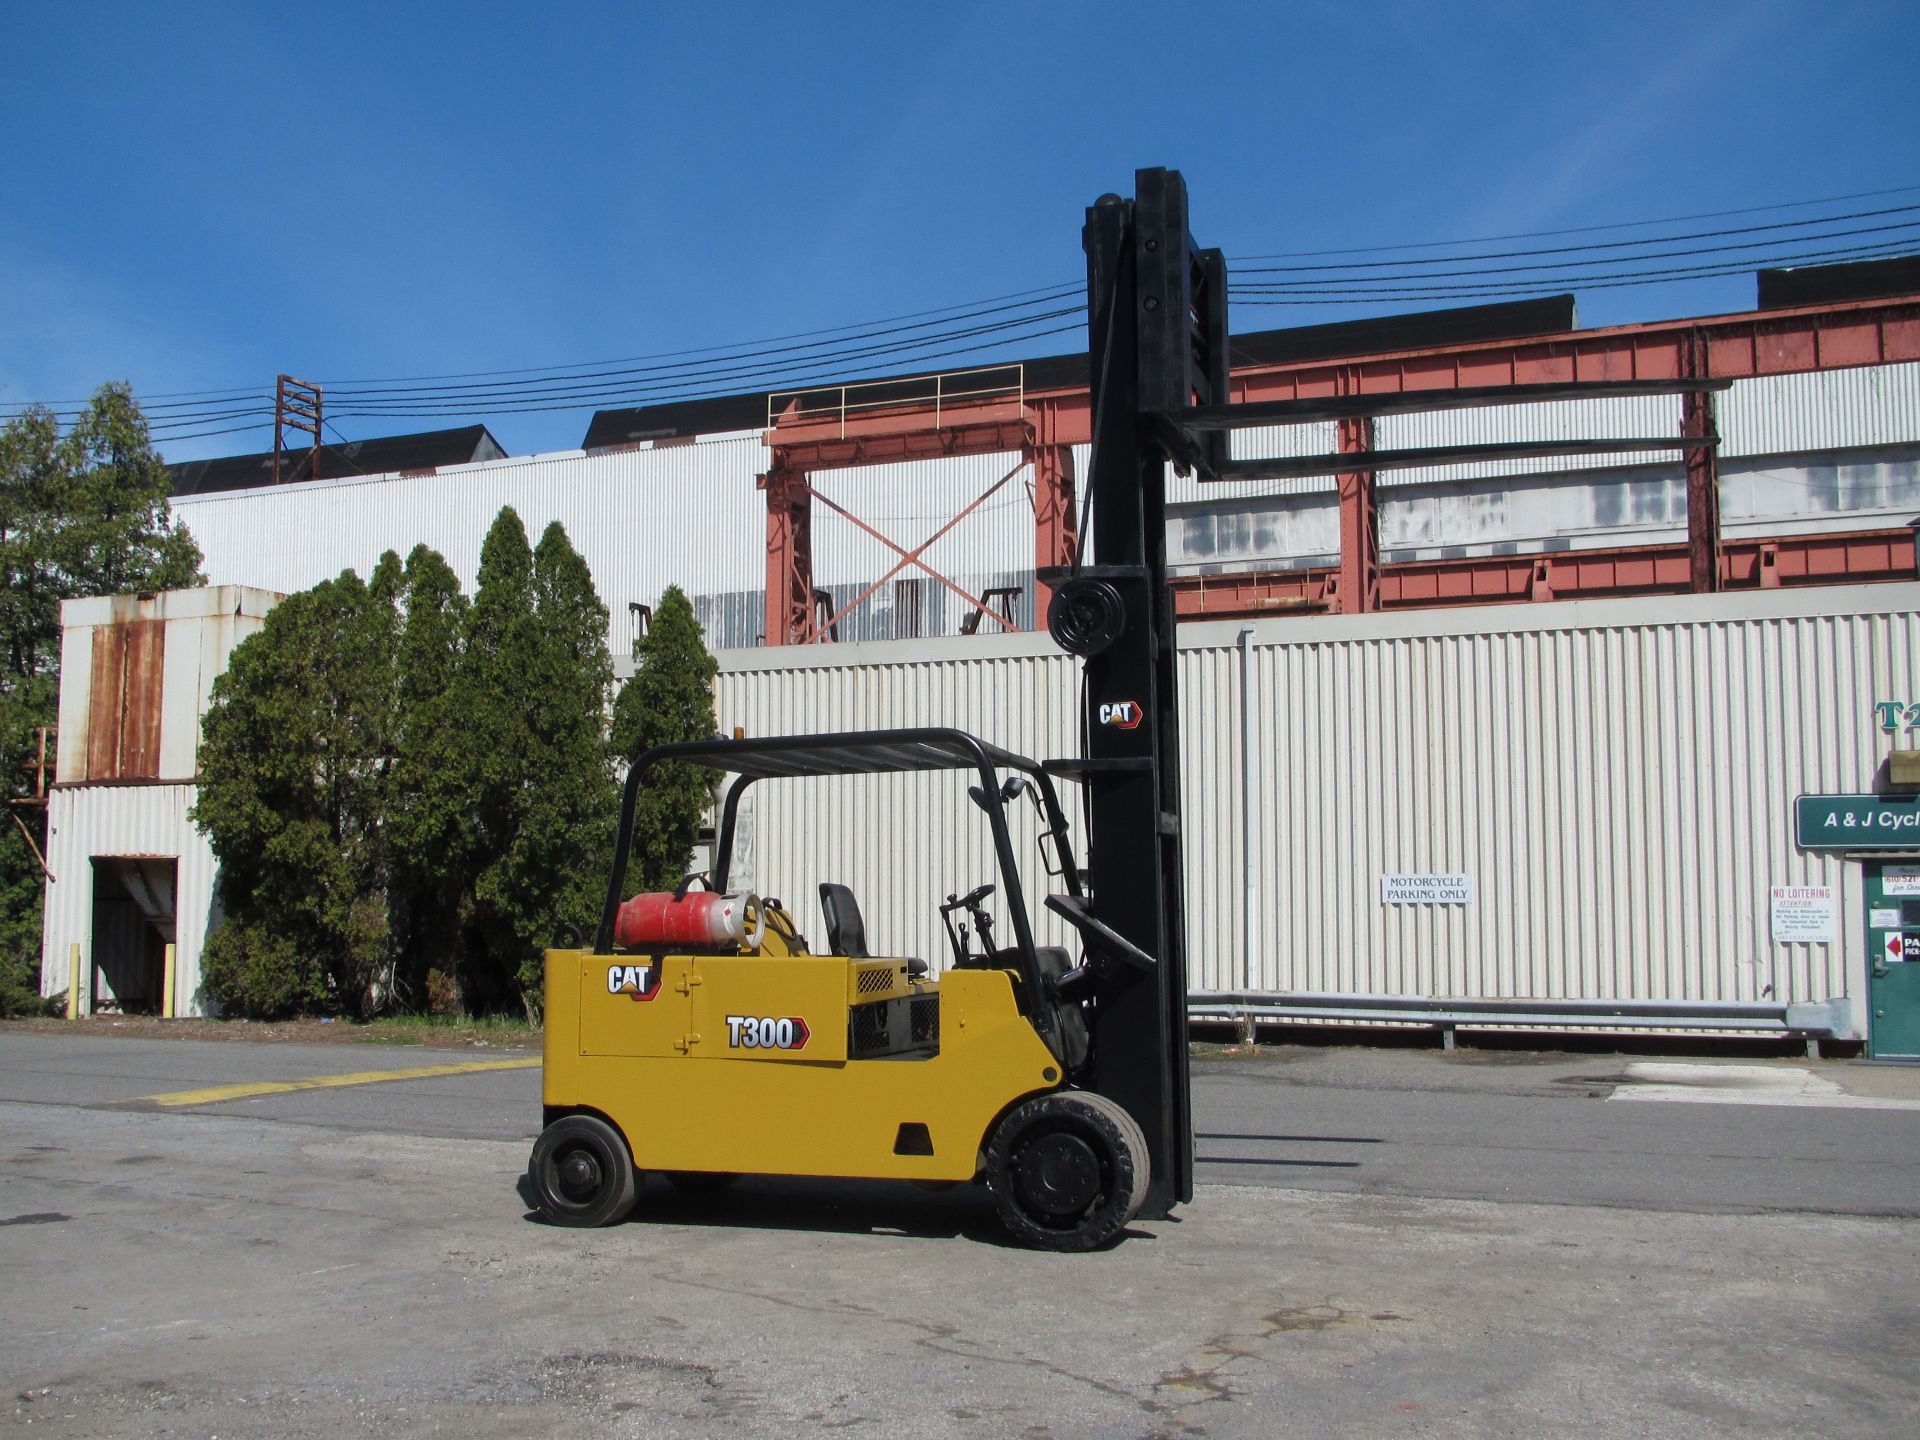 Caterpillar T300 30,000 lb Forklift - Image 5 of 10